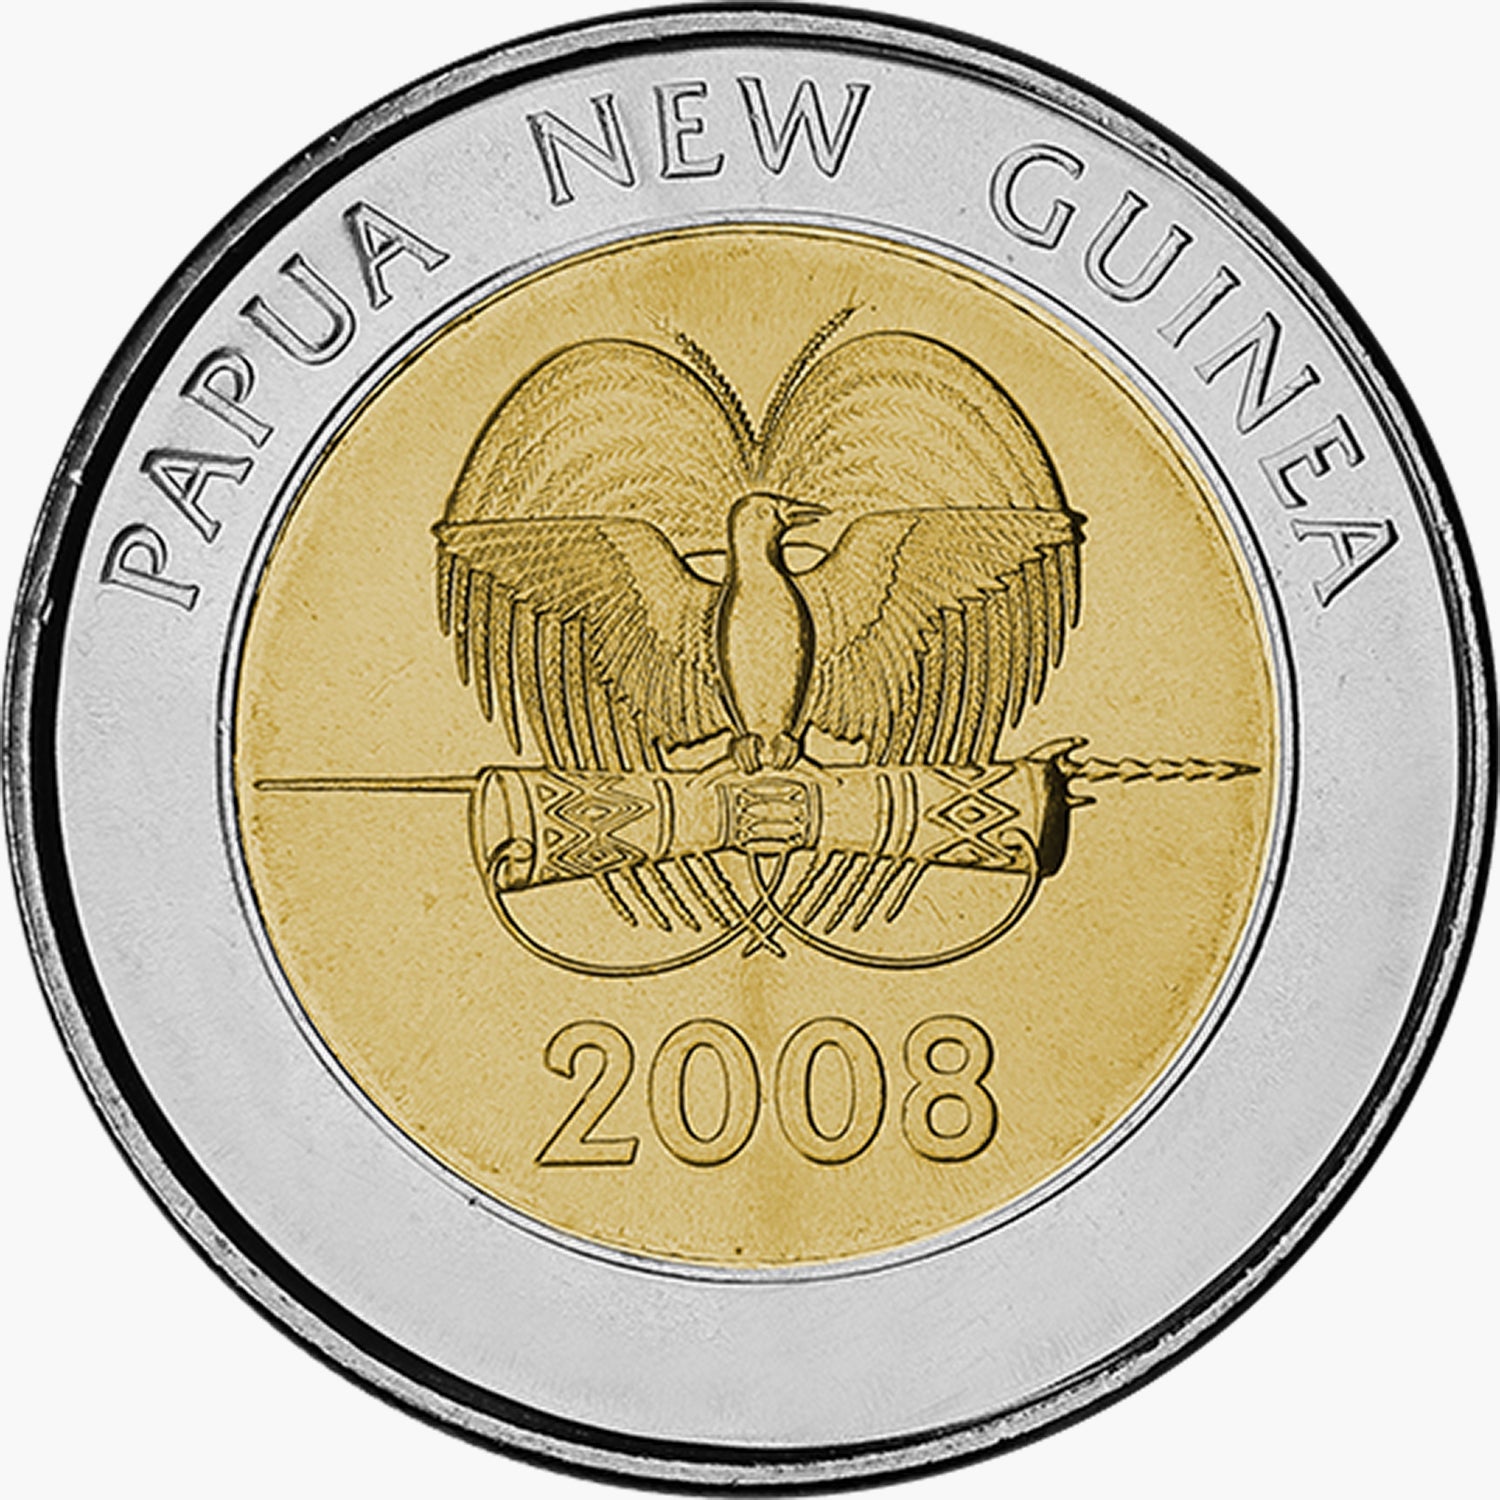 The Five - Bimetallic Coins